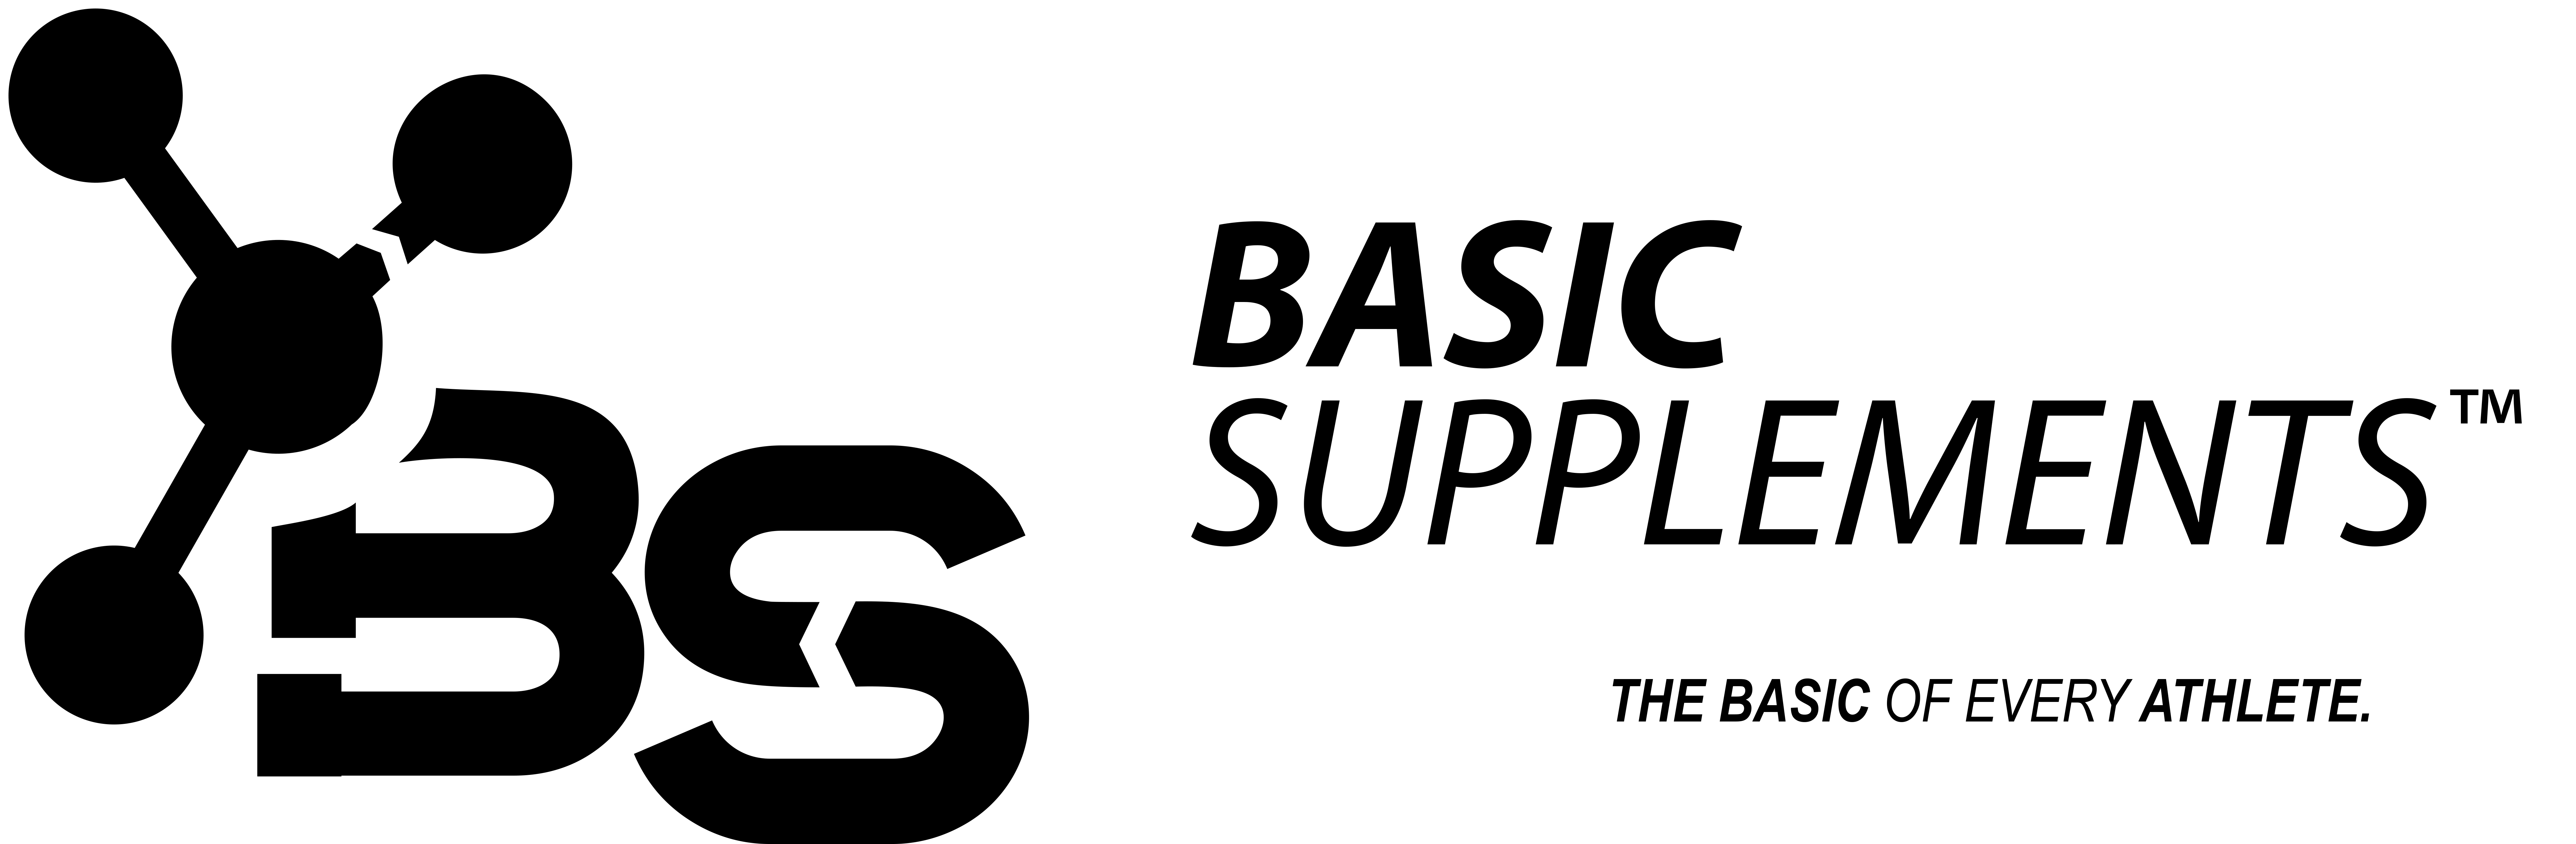 basic supplements logo